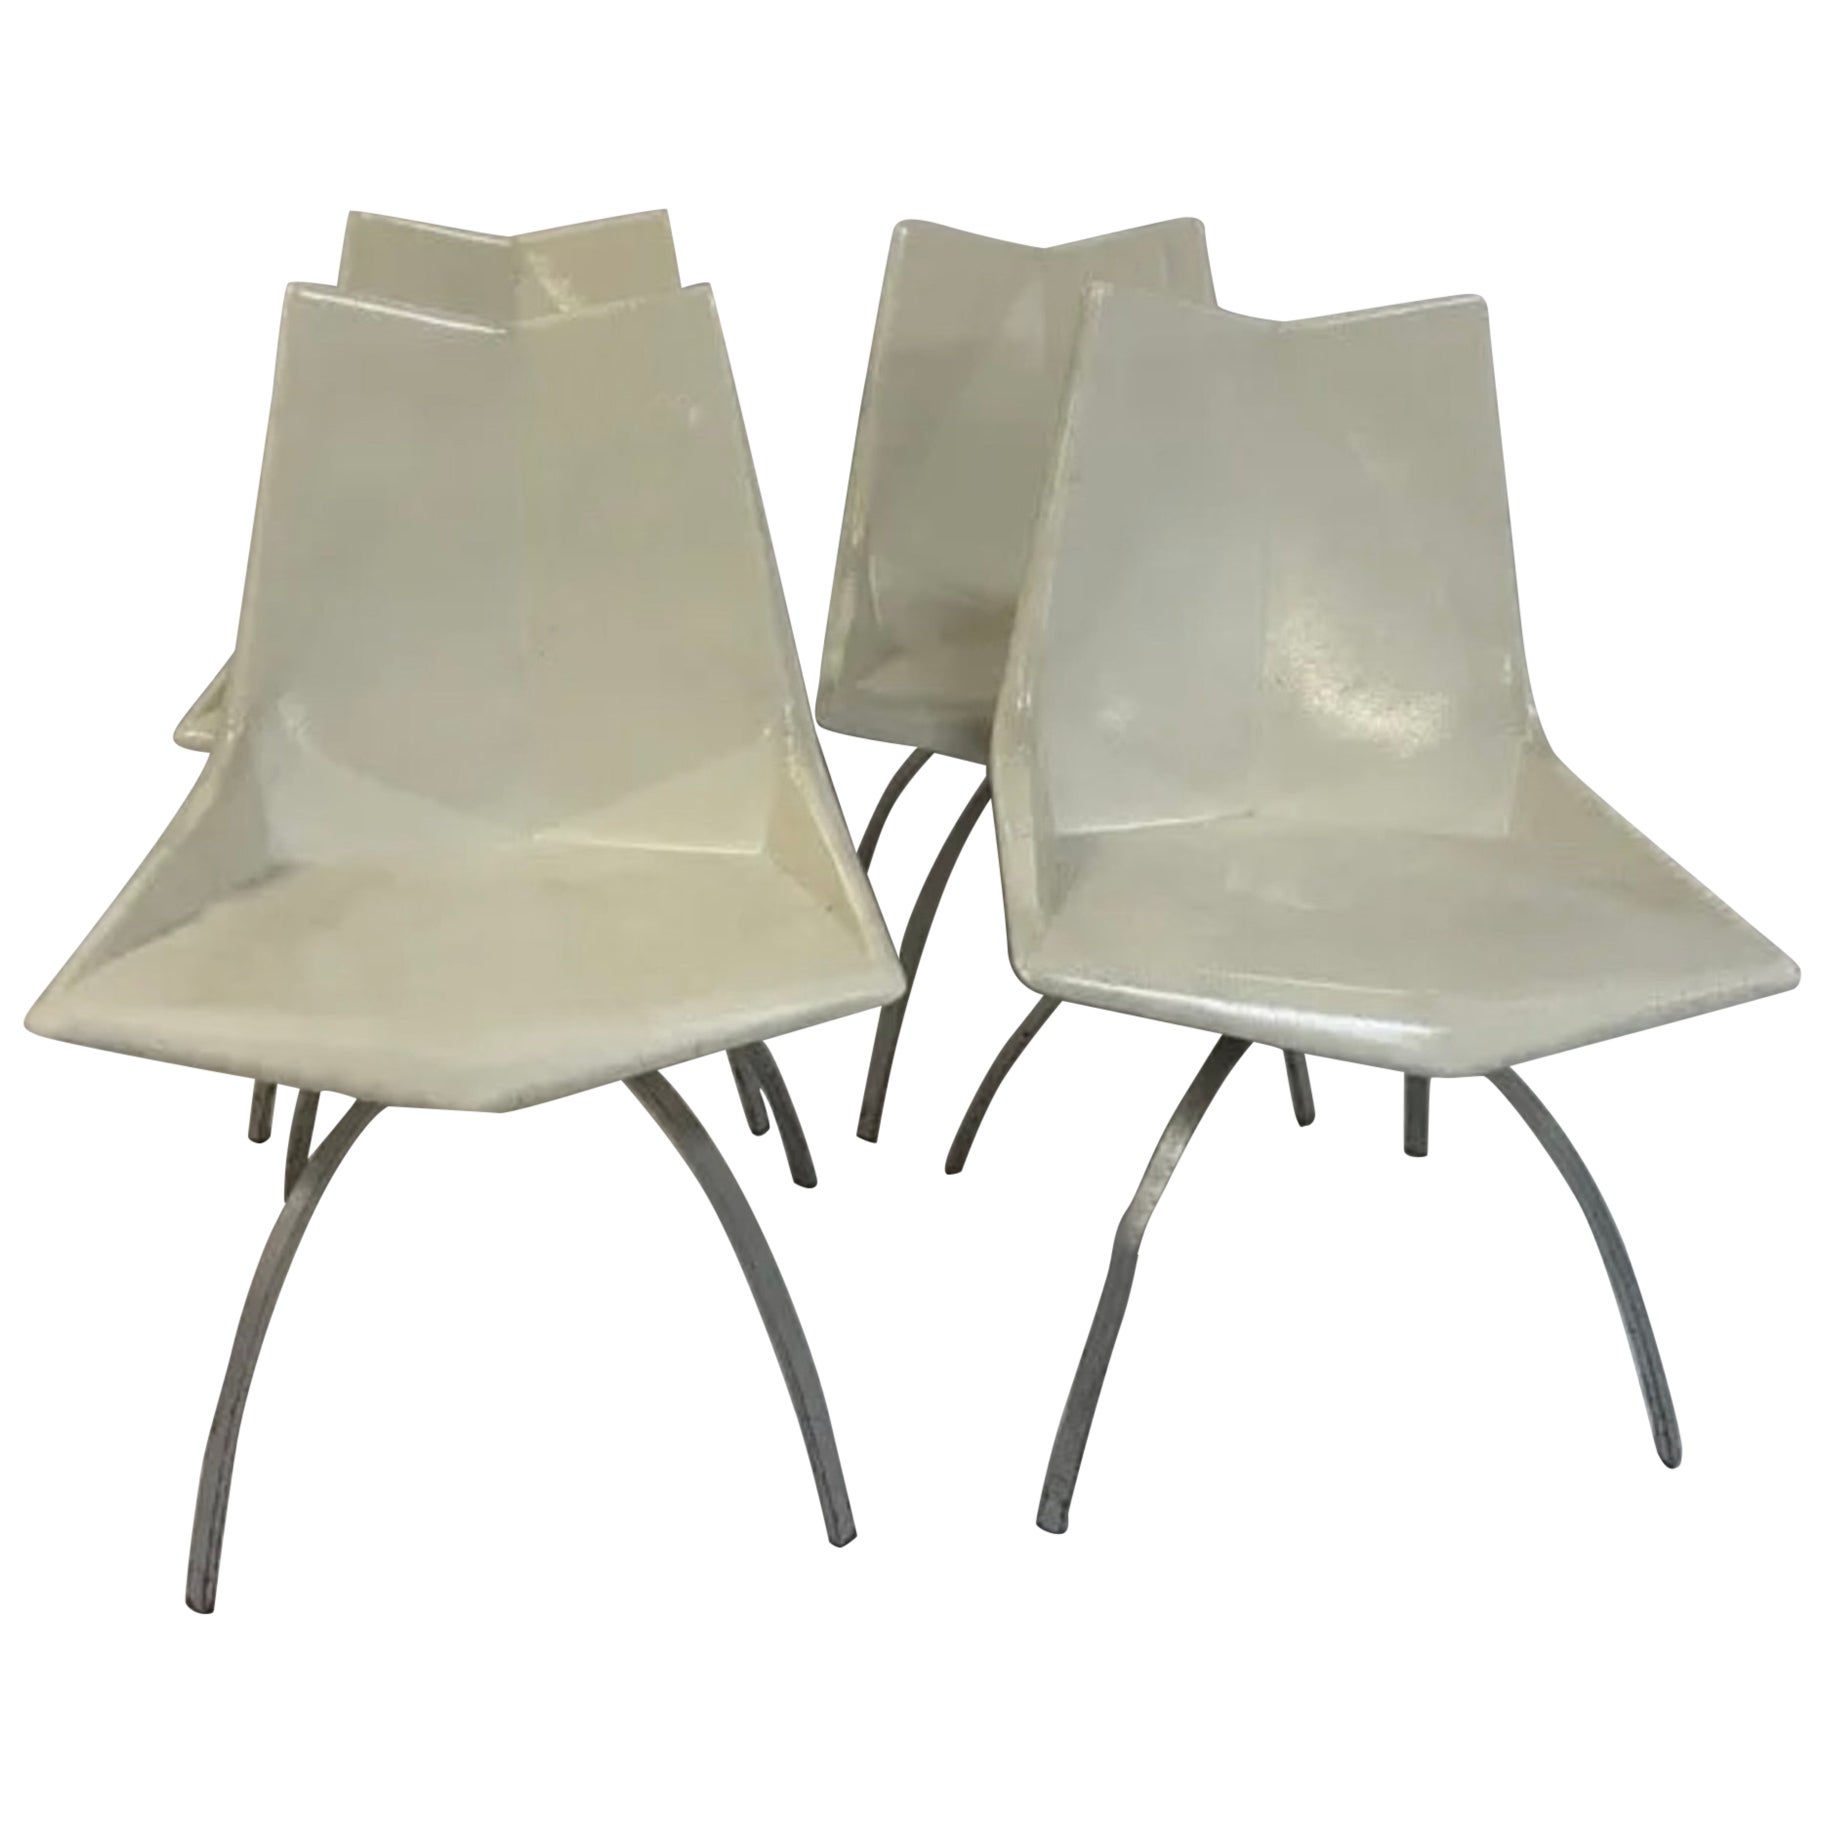 4 Original Midcentury white Paul McCobb Origami Fiberglass Chairs spider base